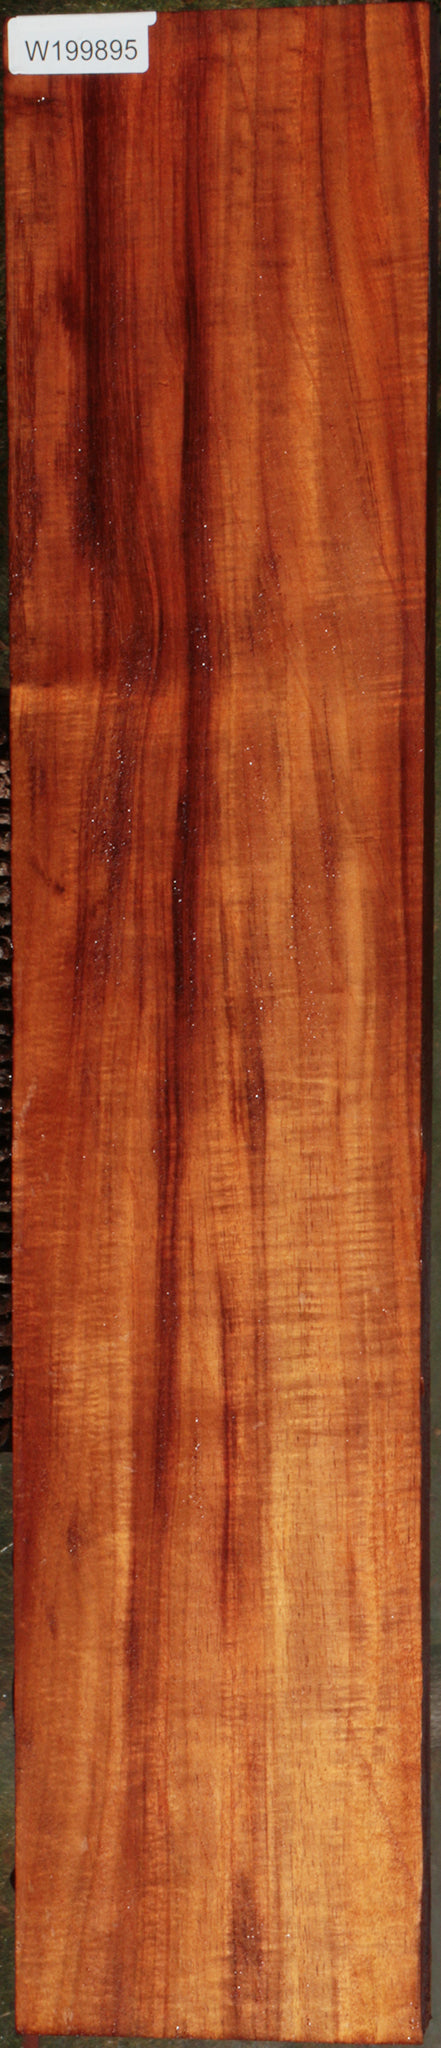 Hawaiian Koa Instrument Lumber